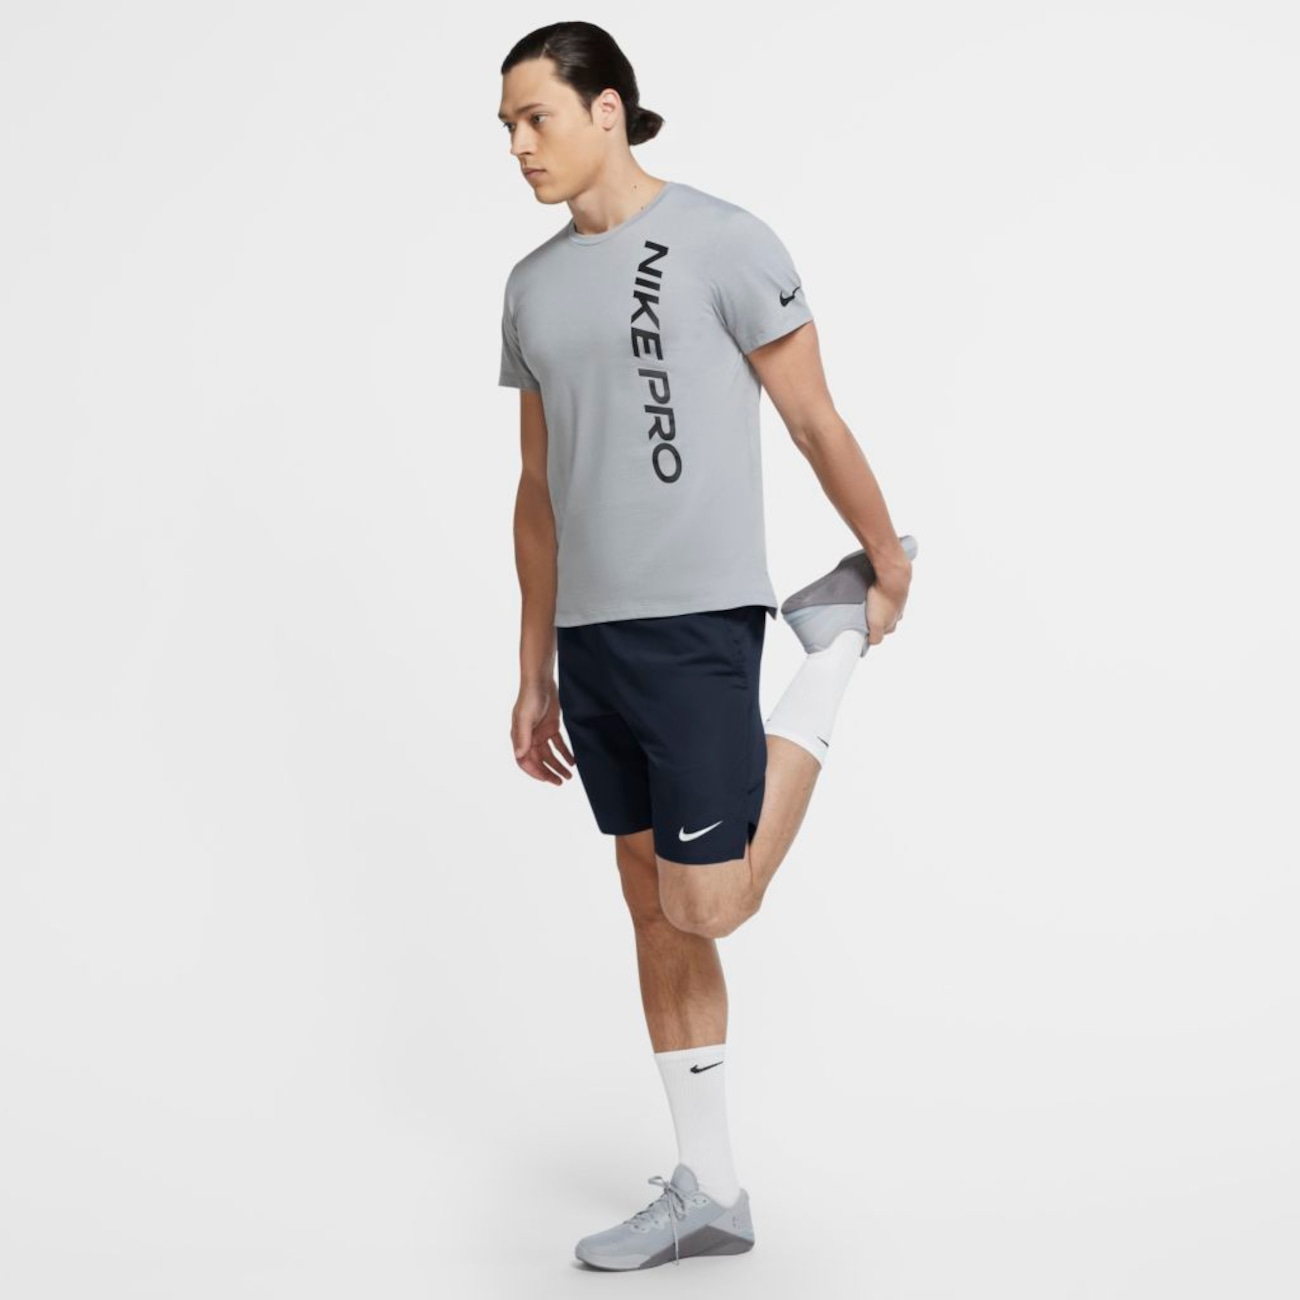 Shorts Nike Flex Masculino - Foto 4